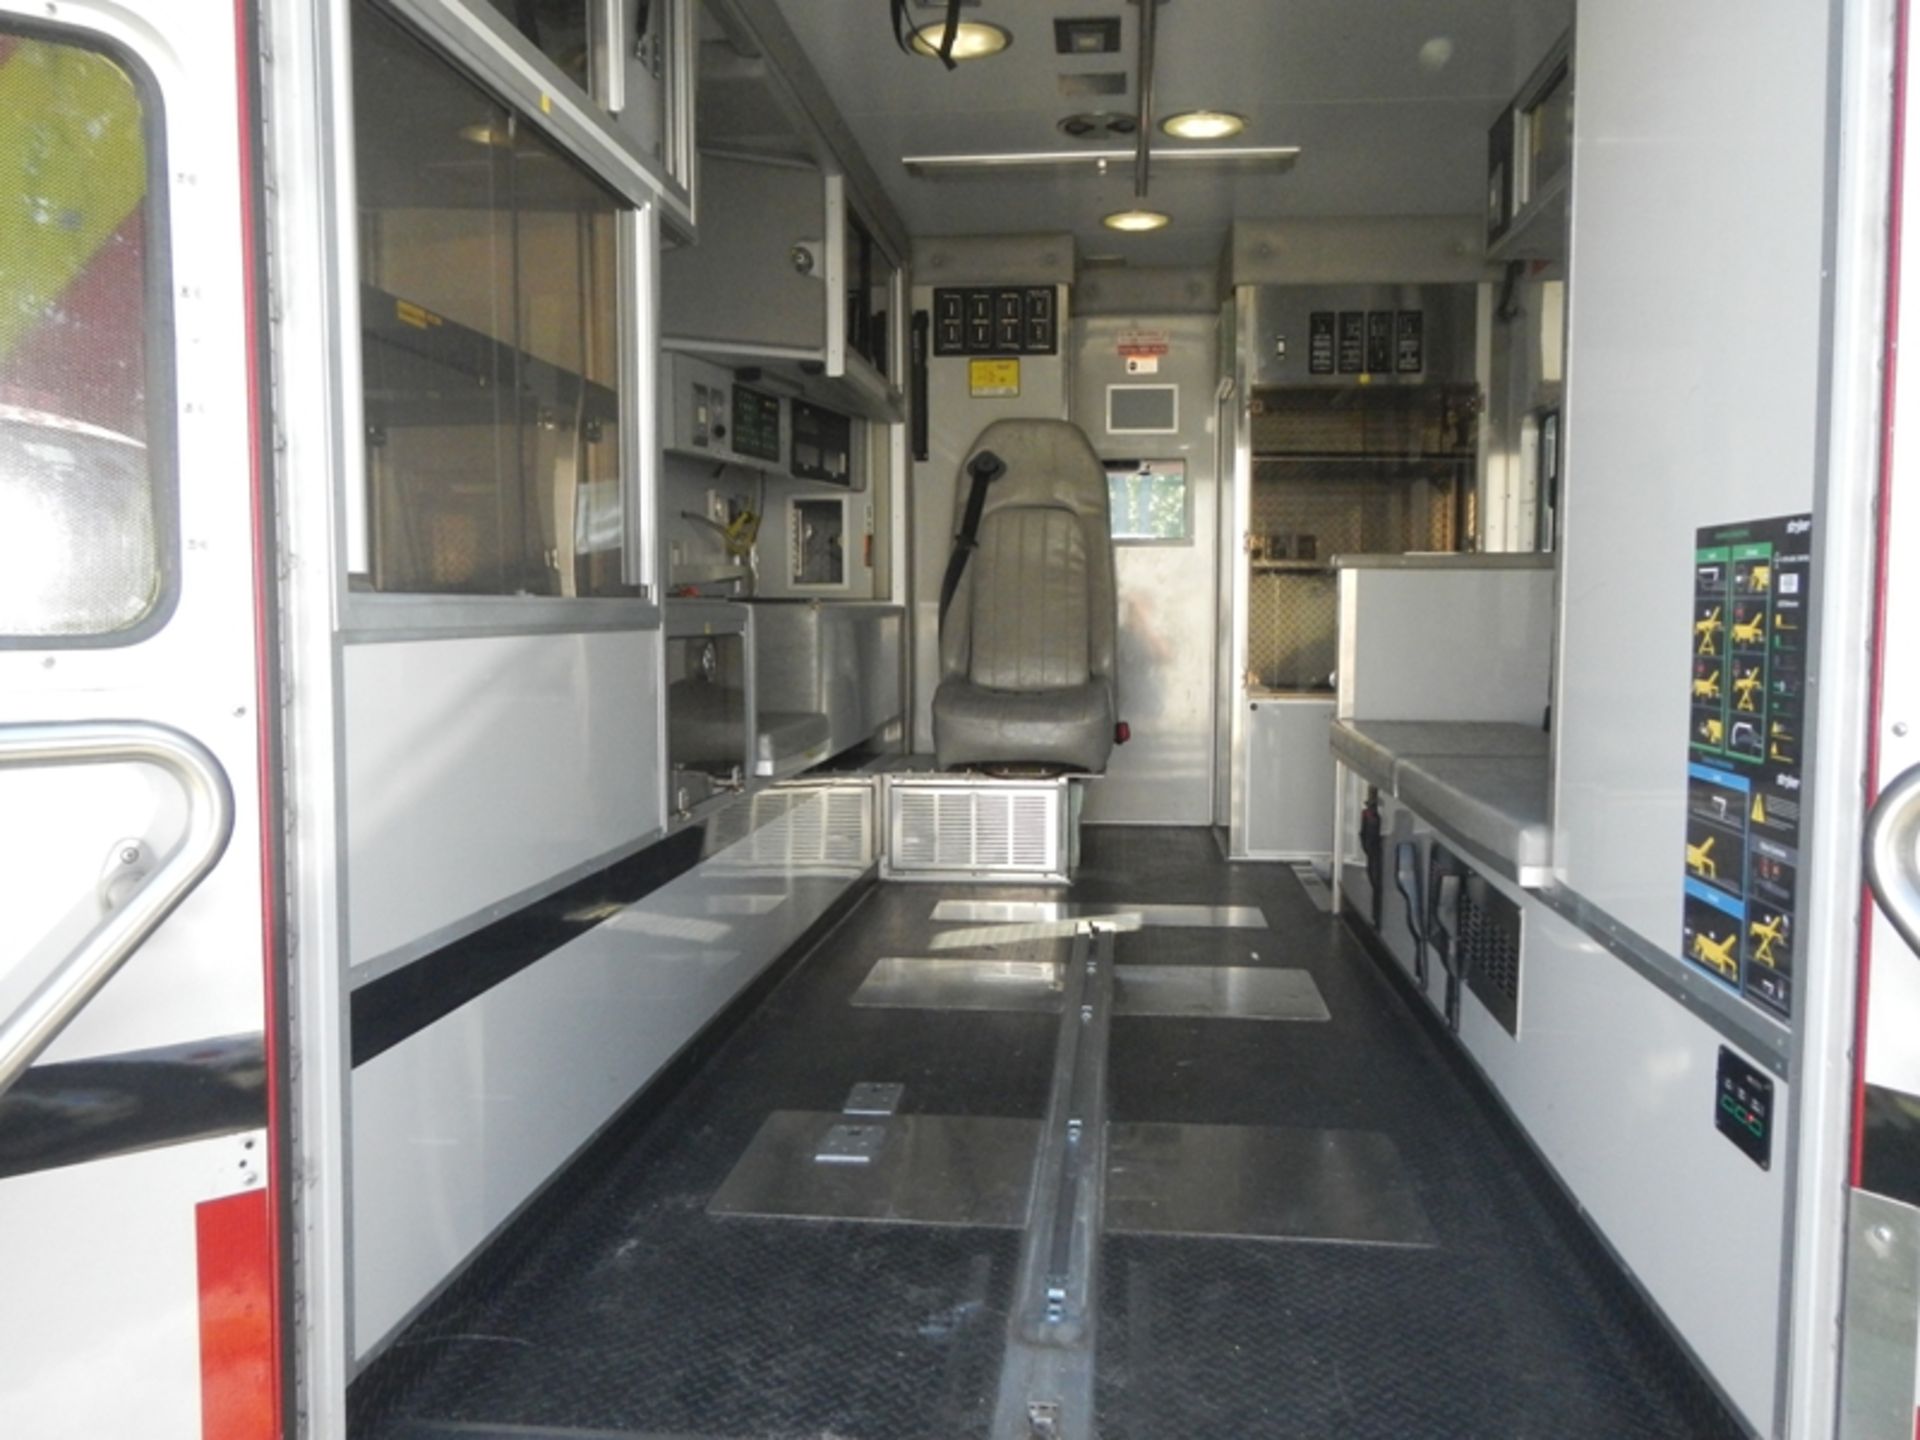 2012 INTERNATIONAL 4000 Medium Duty ambulance 159,900 miles - 1HTMNAAL8CH138069 - Image 6 of 6